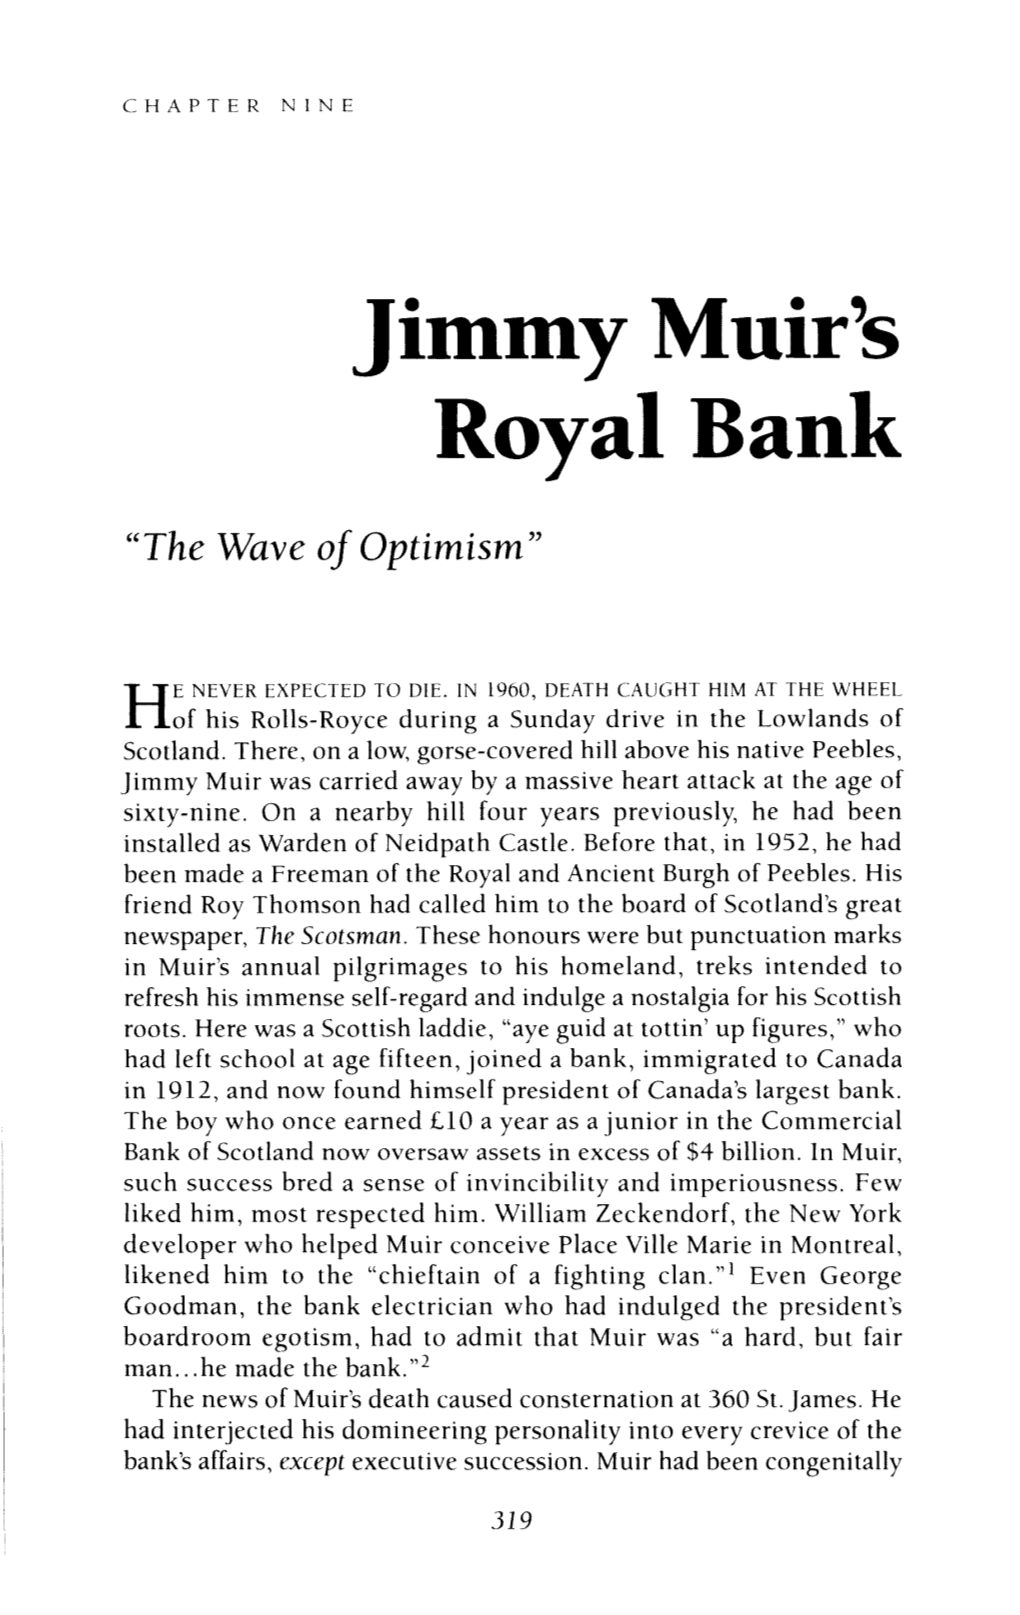 Jimmy Muir's Royal Bank